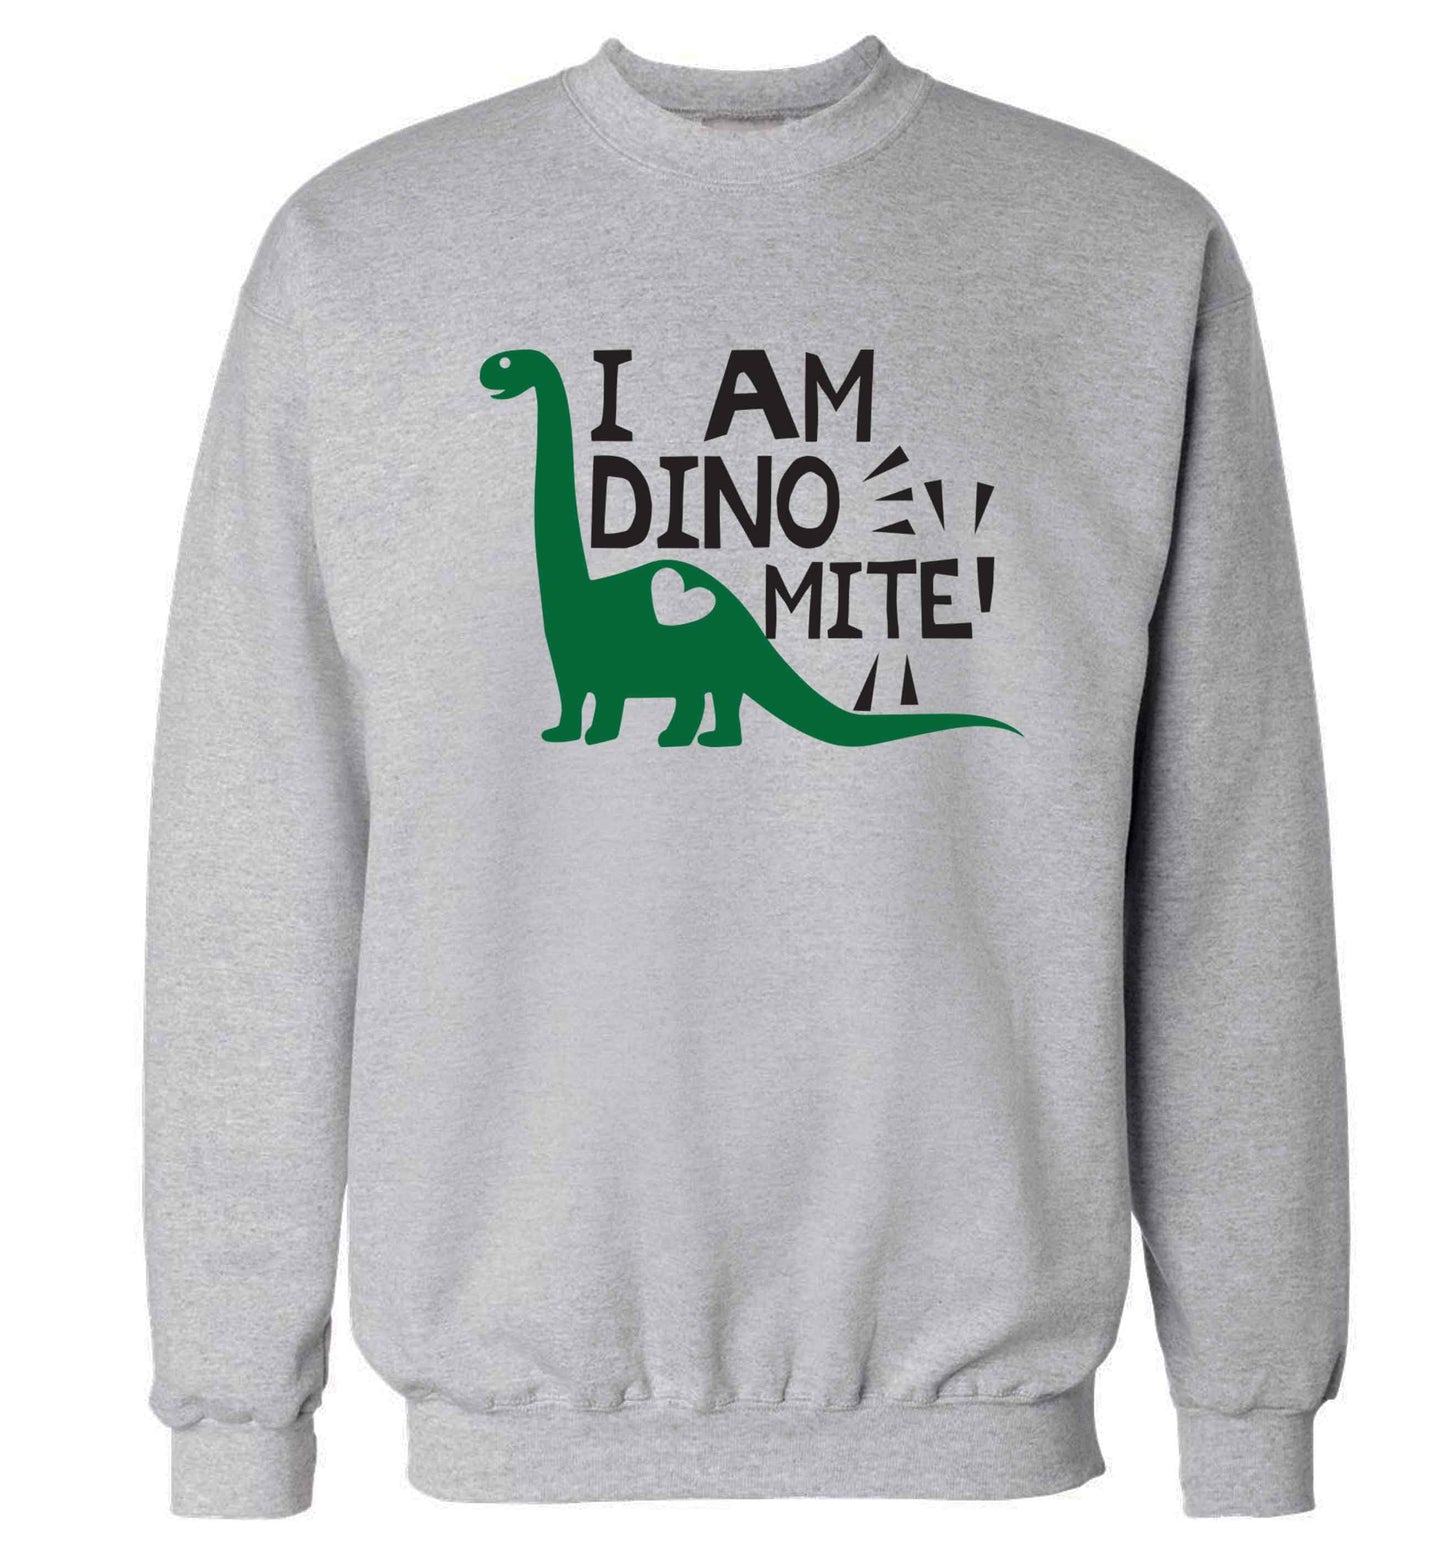 I am dinomite! Adult's unisex grey Sweater 2XL